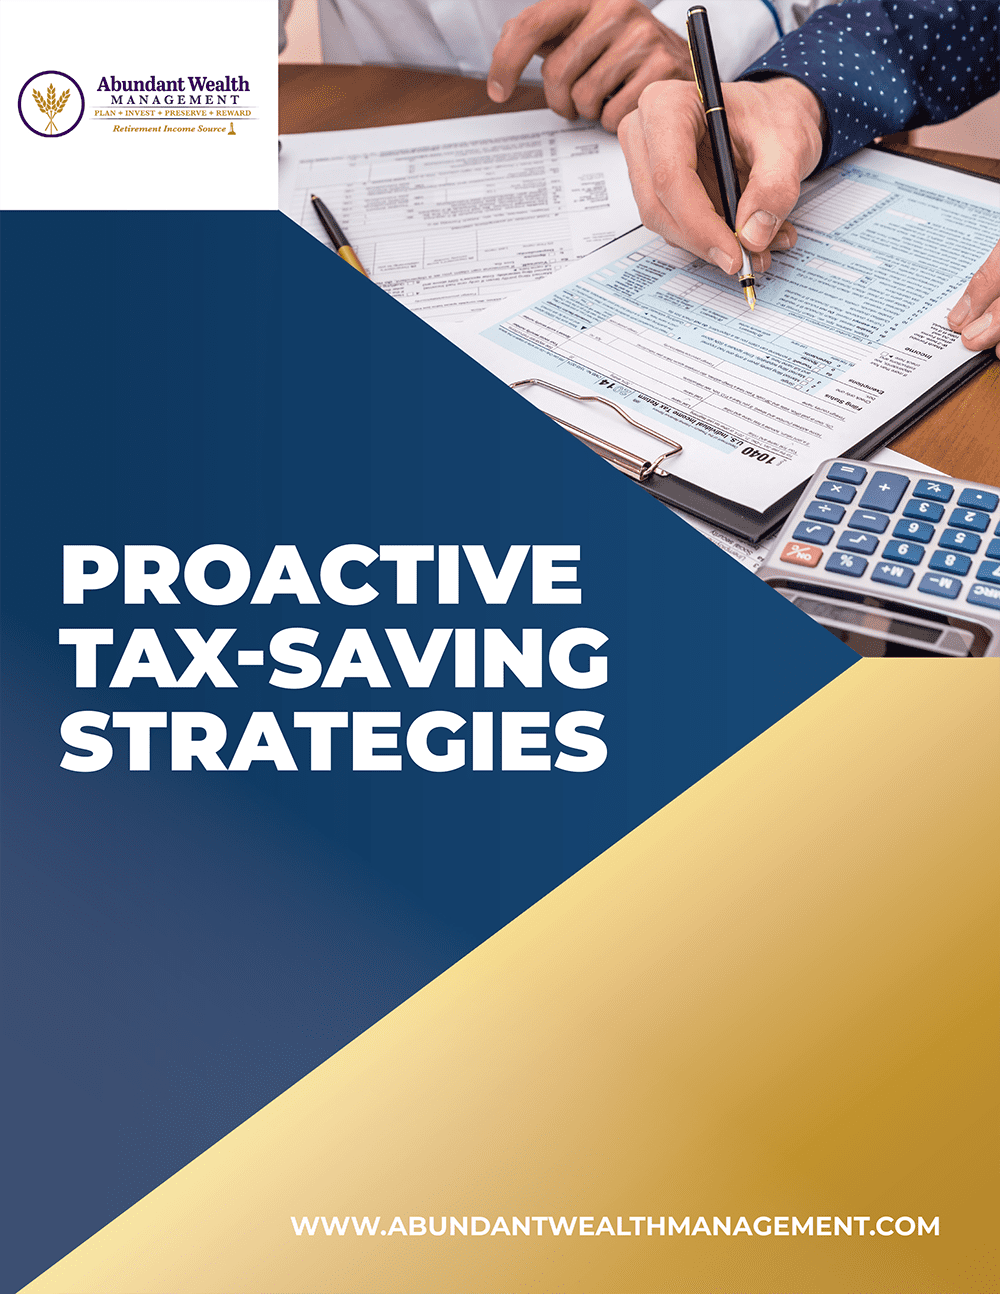 Abundant Wealth Management - Proactive Tax-Saving Strategies-1